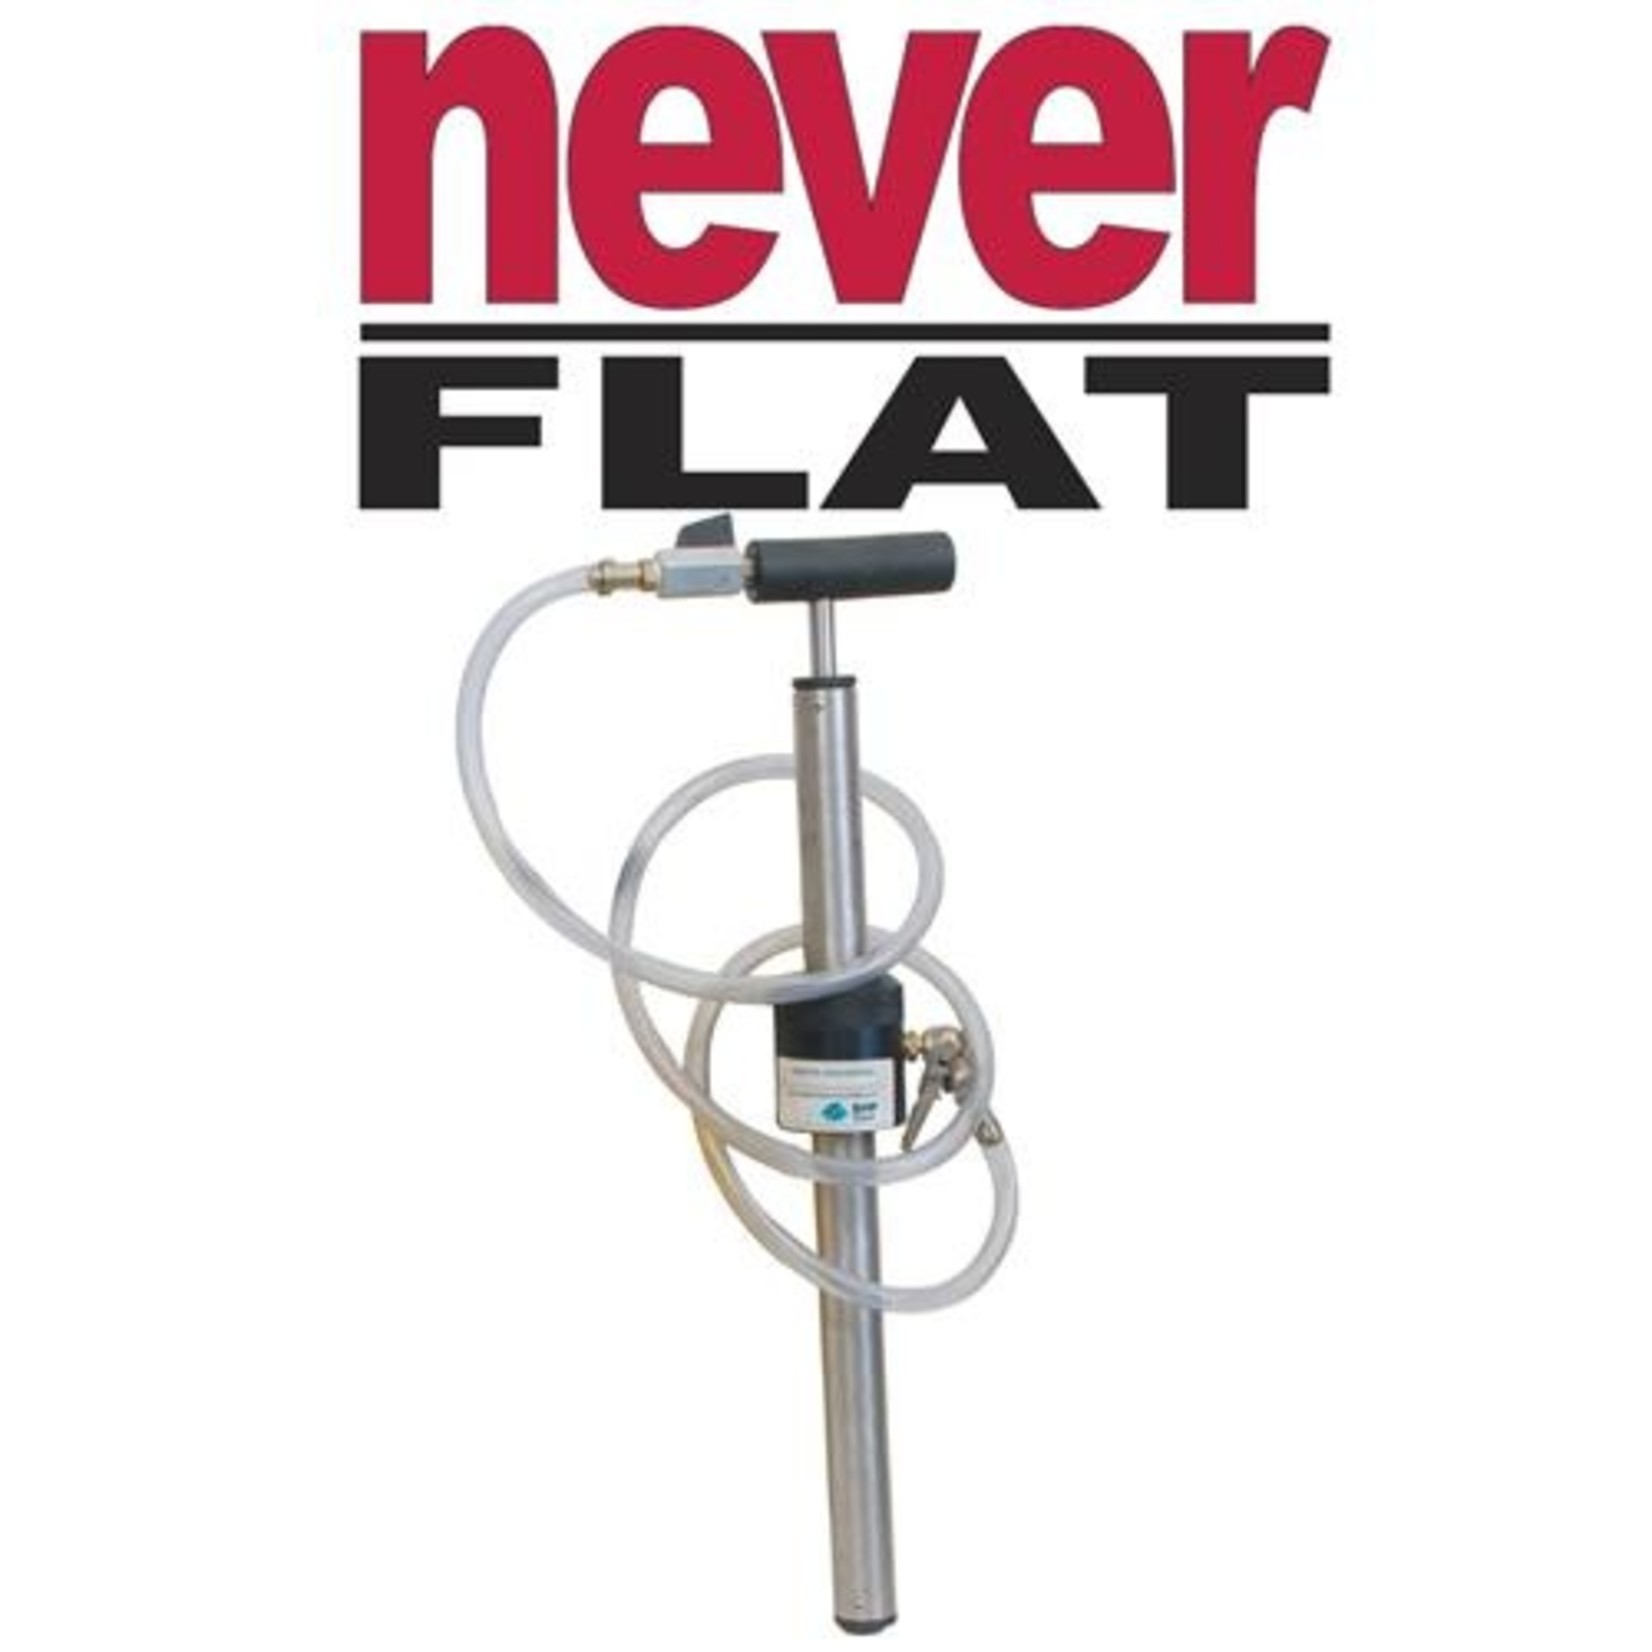 Never Flat Bike/Cycling Pump